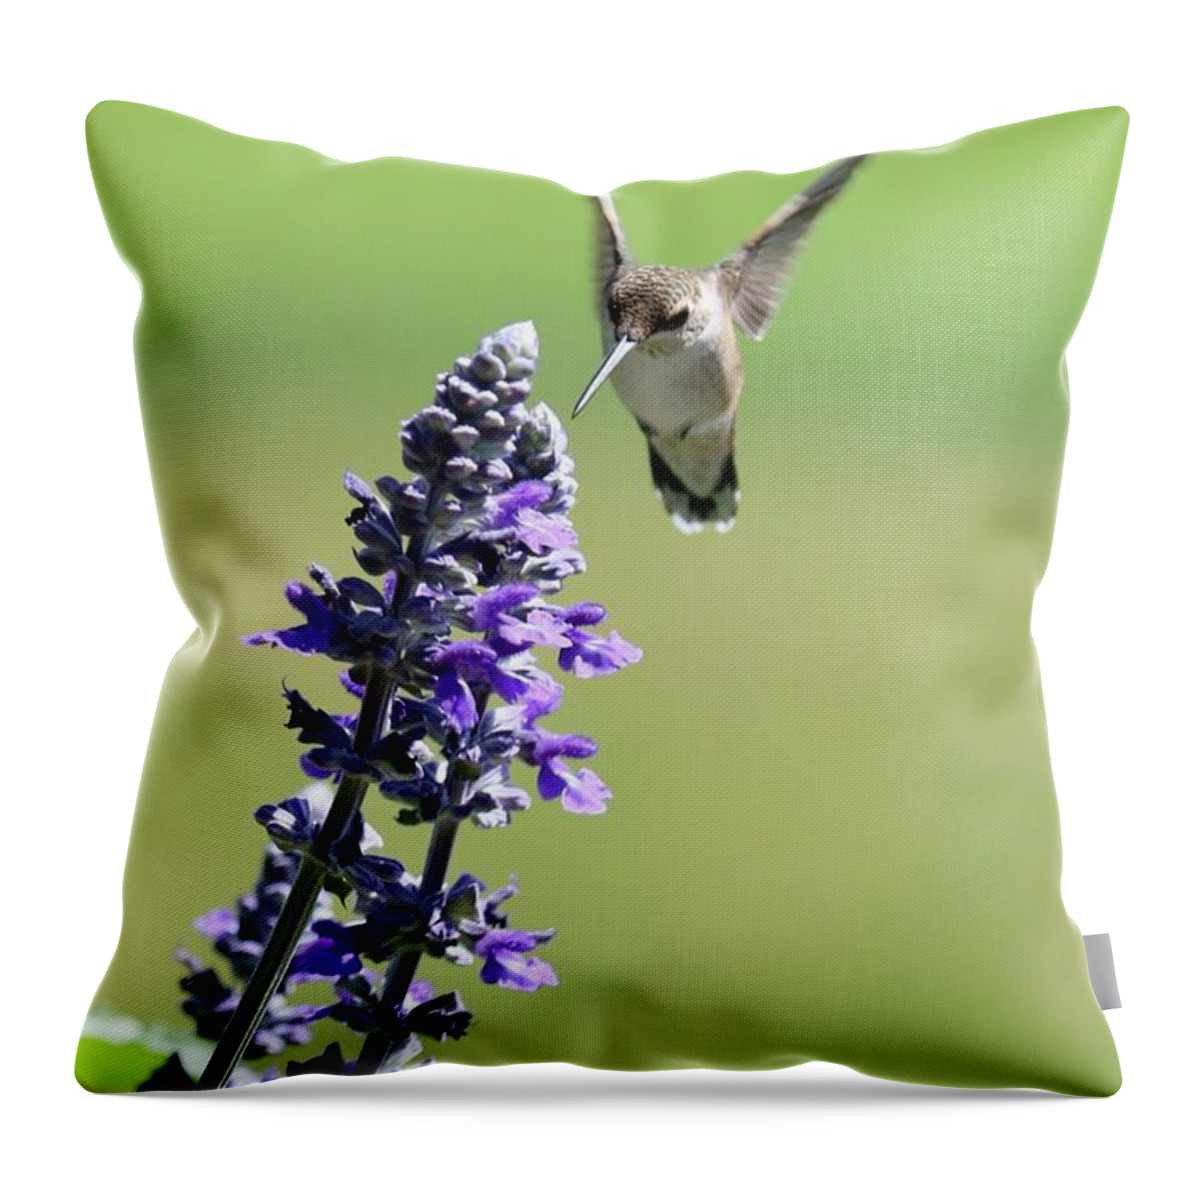 Hummingbird Throw Pillow featuring the photograph Hummingbird Arrival by Carol Groenen